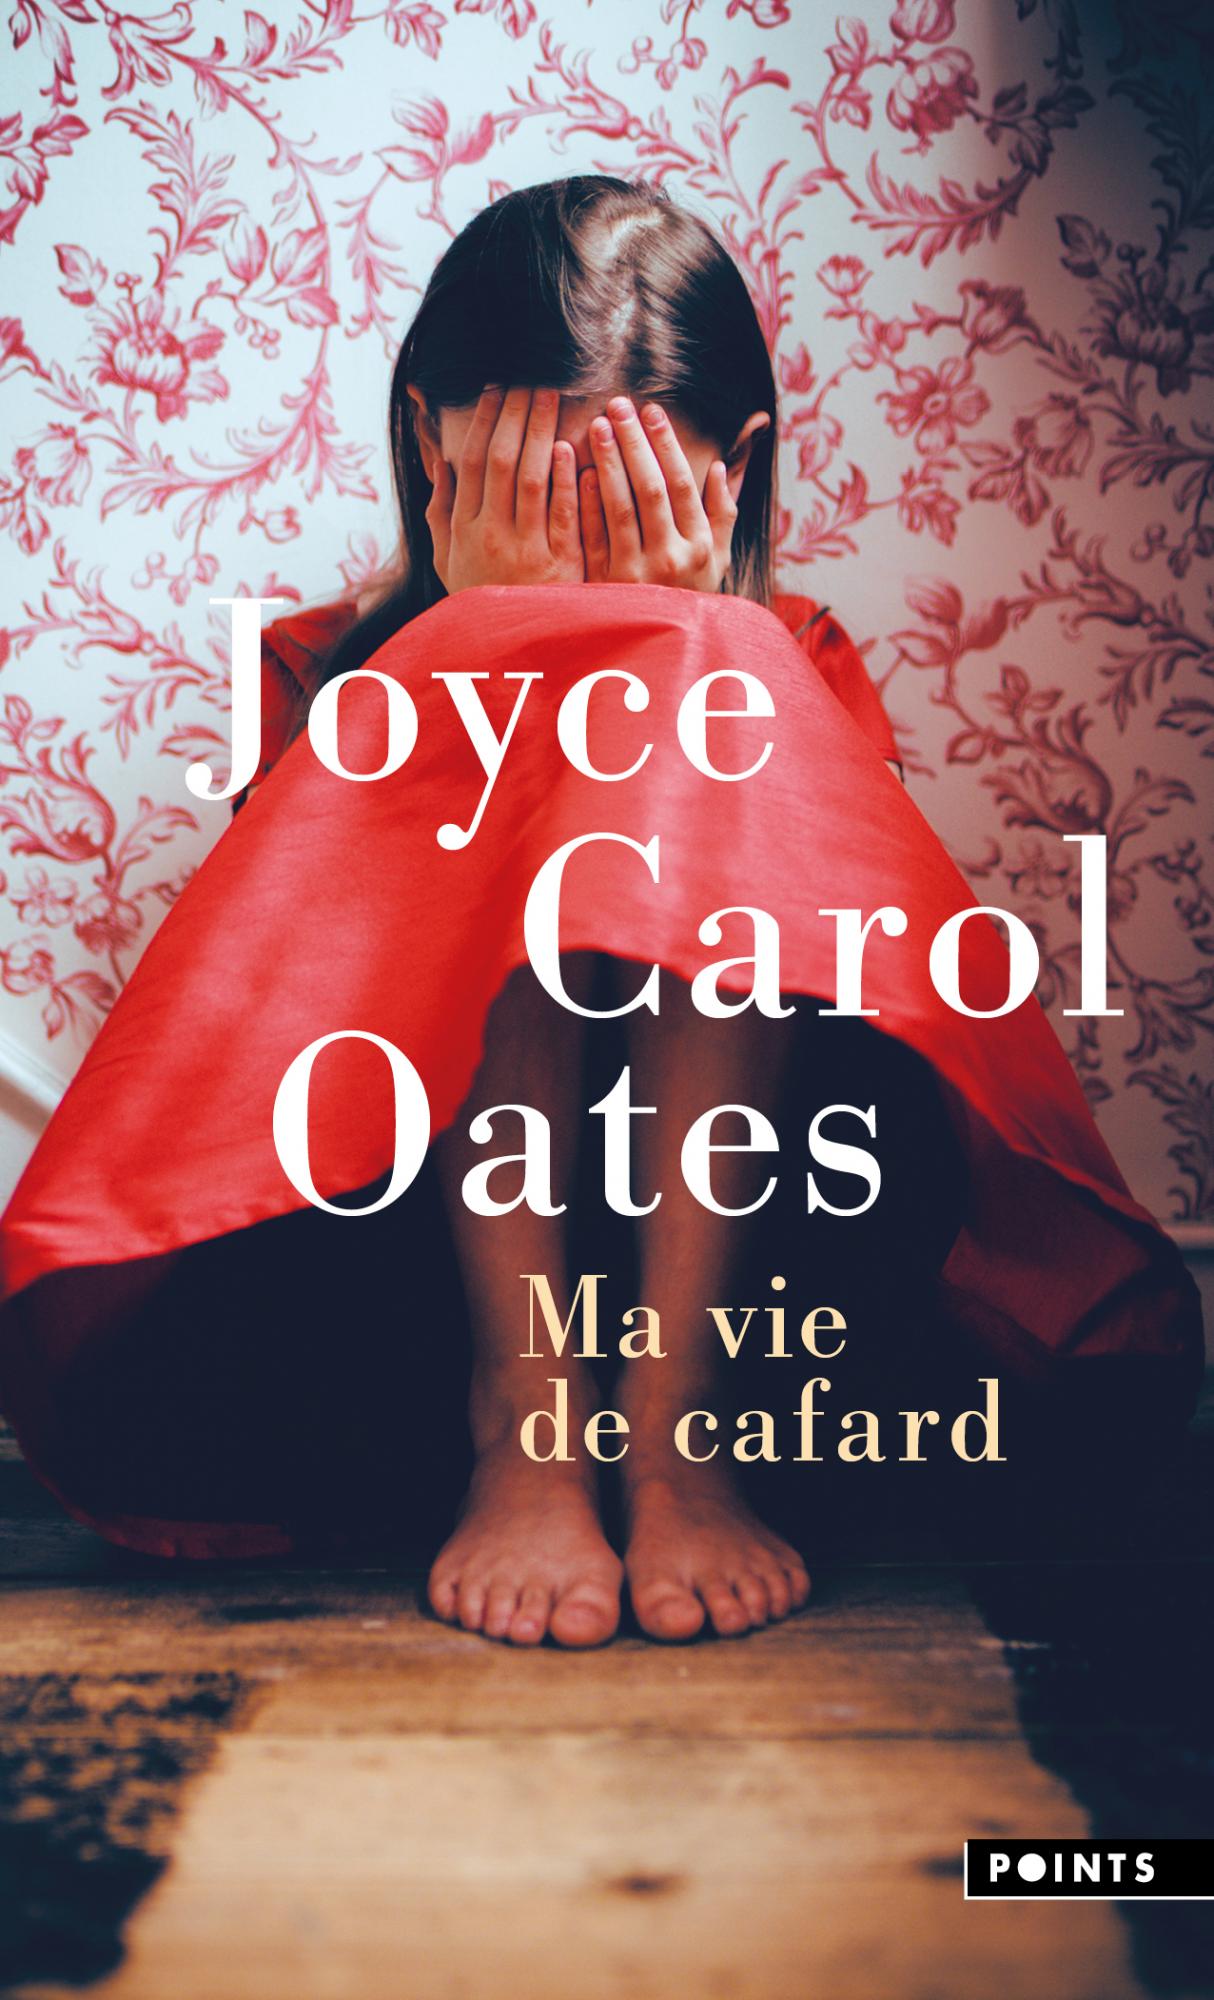 Ma vie de cafard - Joyce Carol Oates